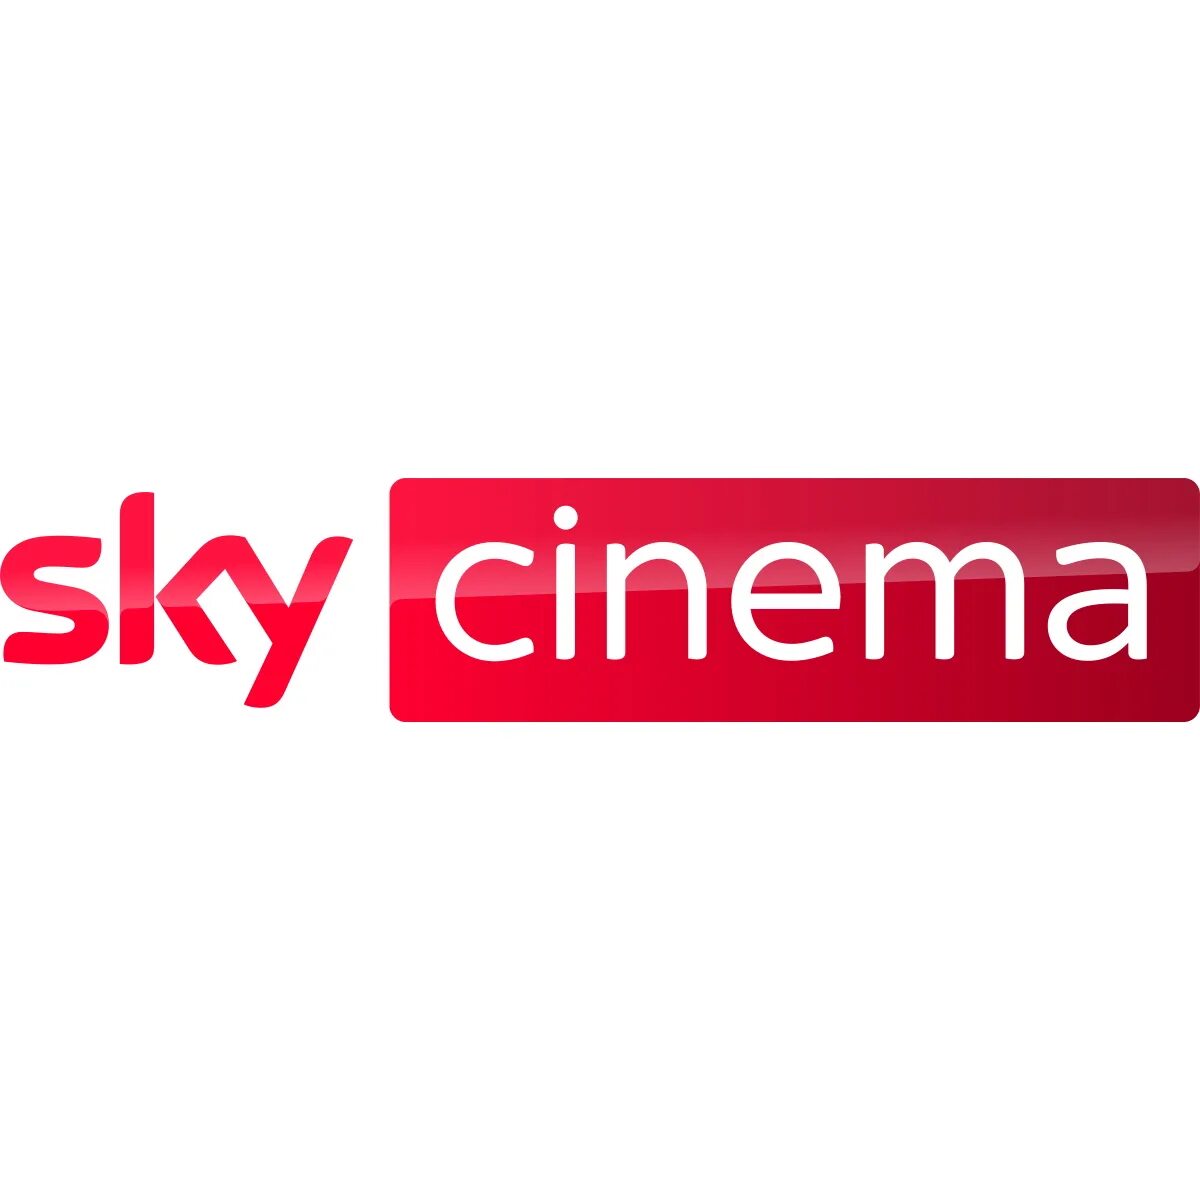 Fun de fun. Sky Cinema. Cinema Classic TV логотип. Sky Cinema Телеканалы Великобритании. Sky Cinema uno logo.